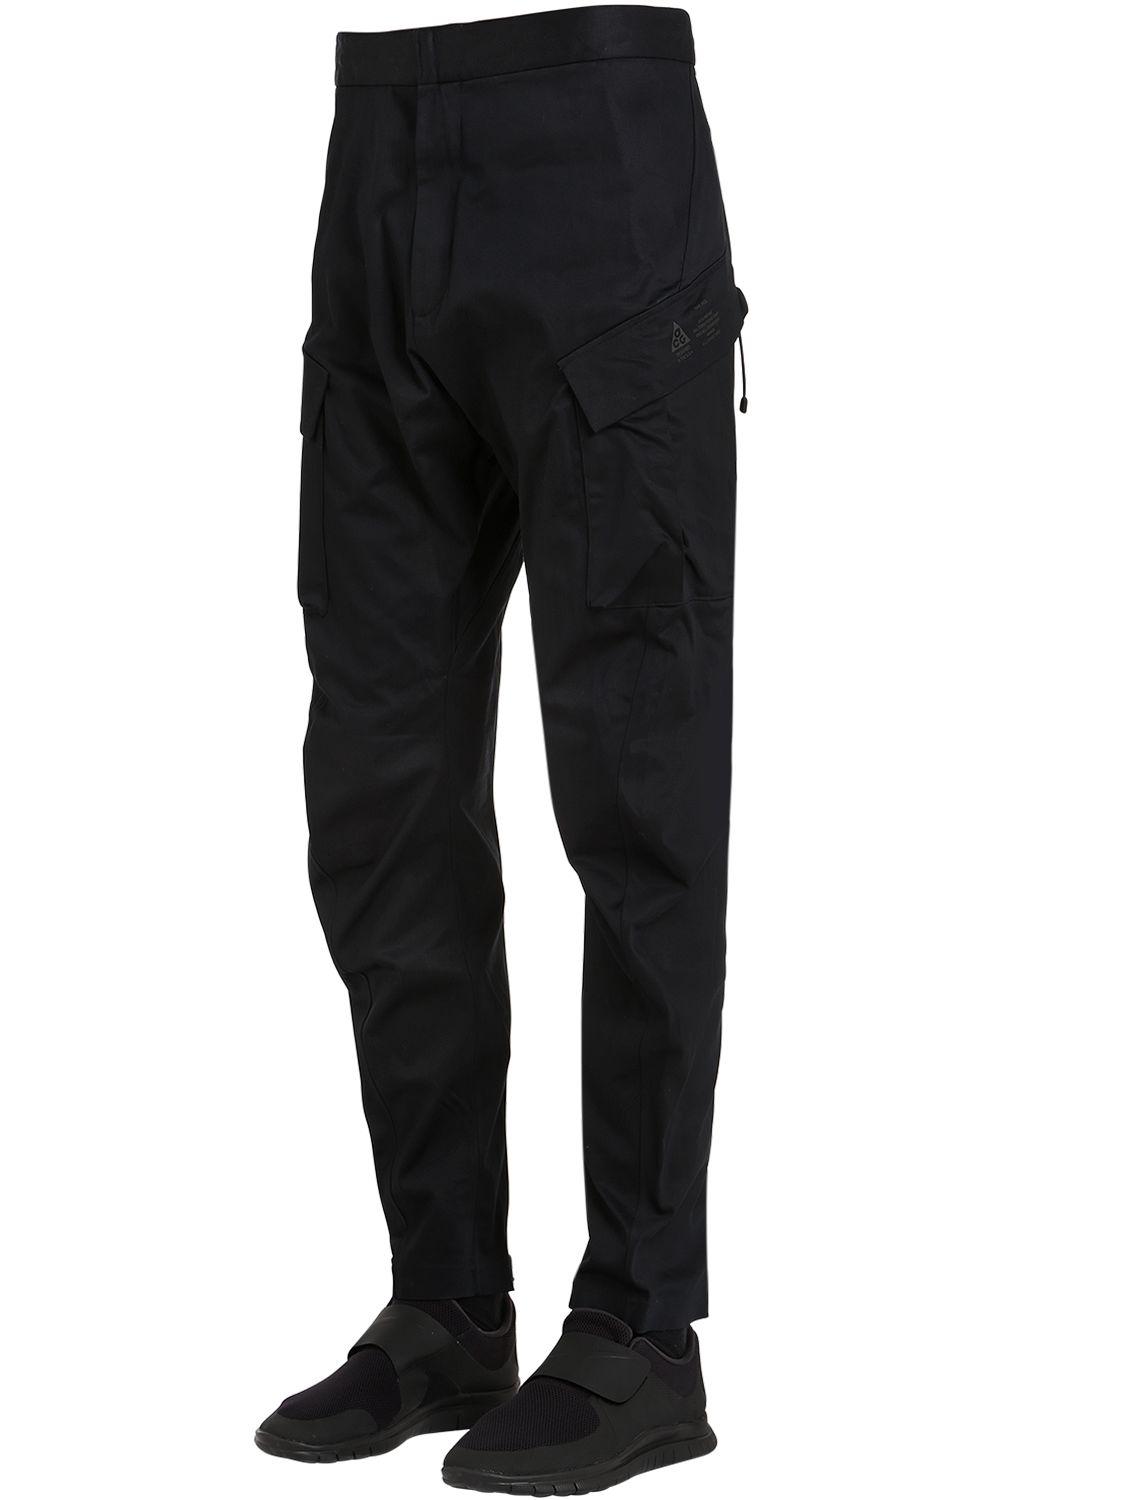 Nike Nikelab Acg Cargo Pants in Black for Men - Lyst